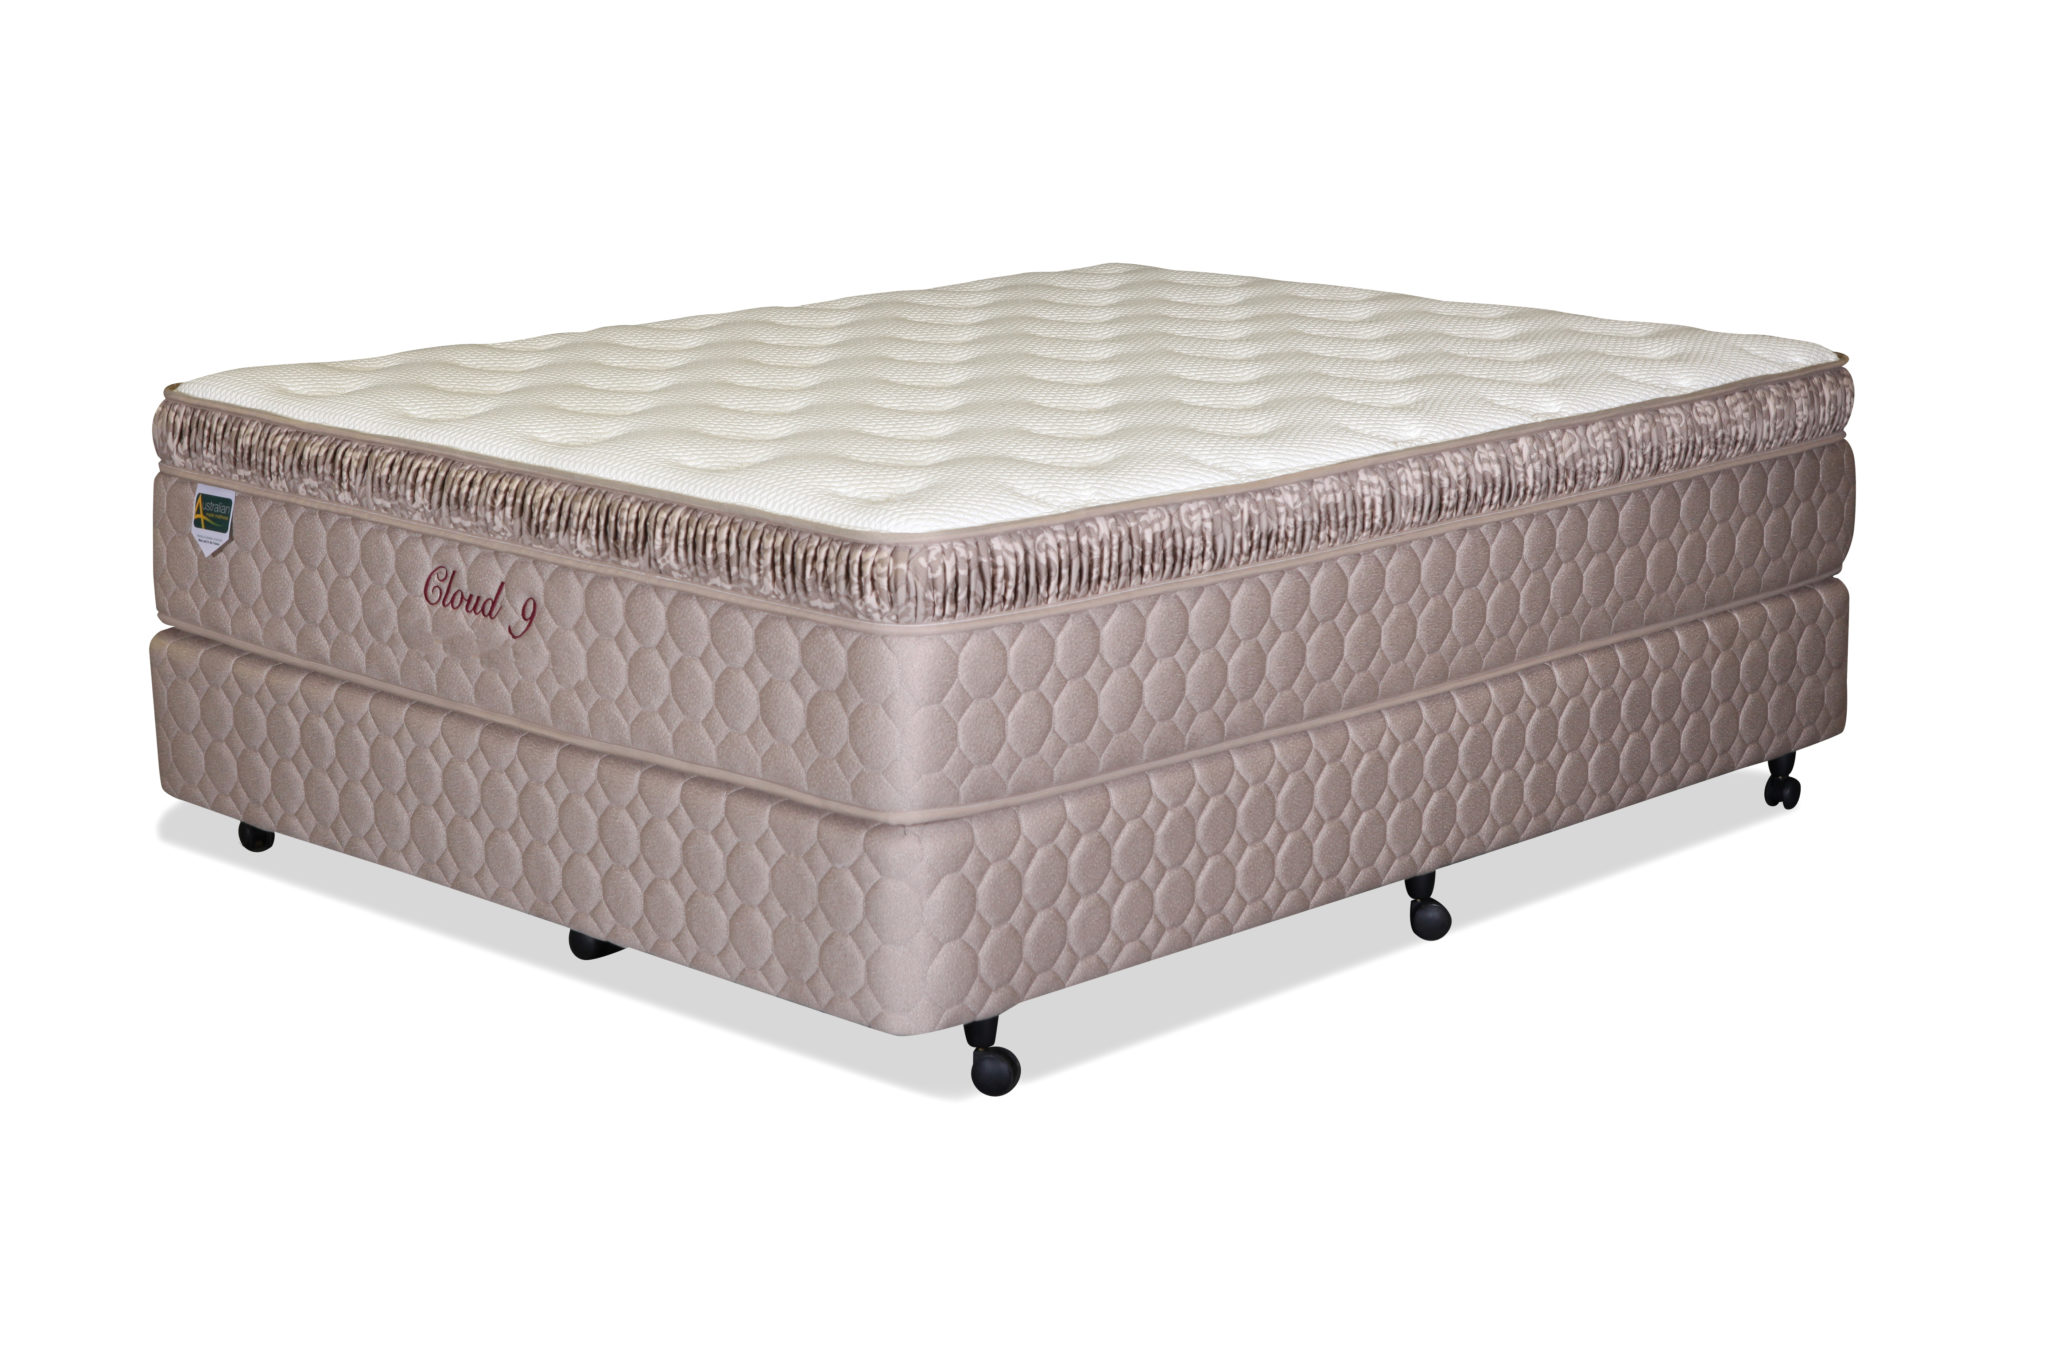 mattress comparable to serta cloud nine